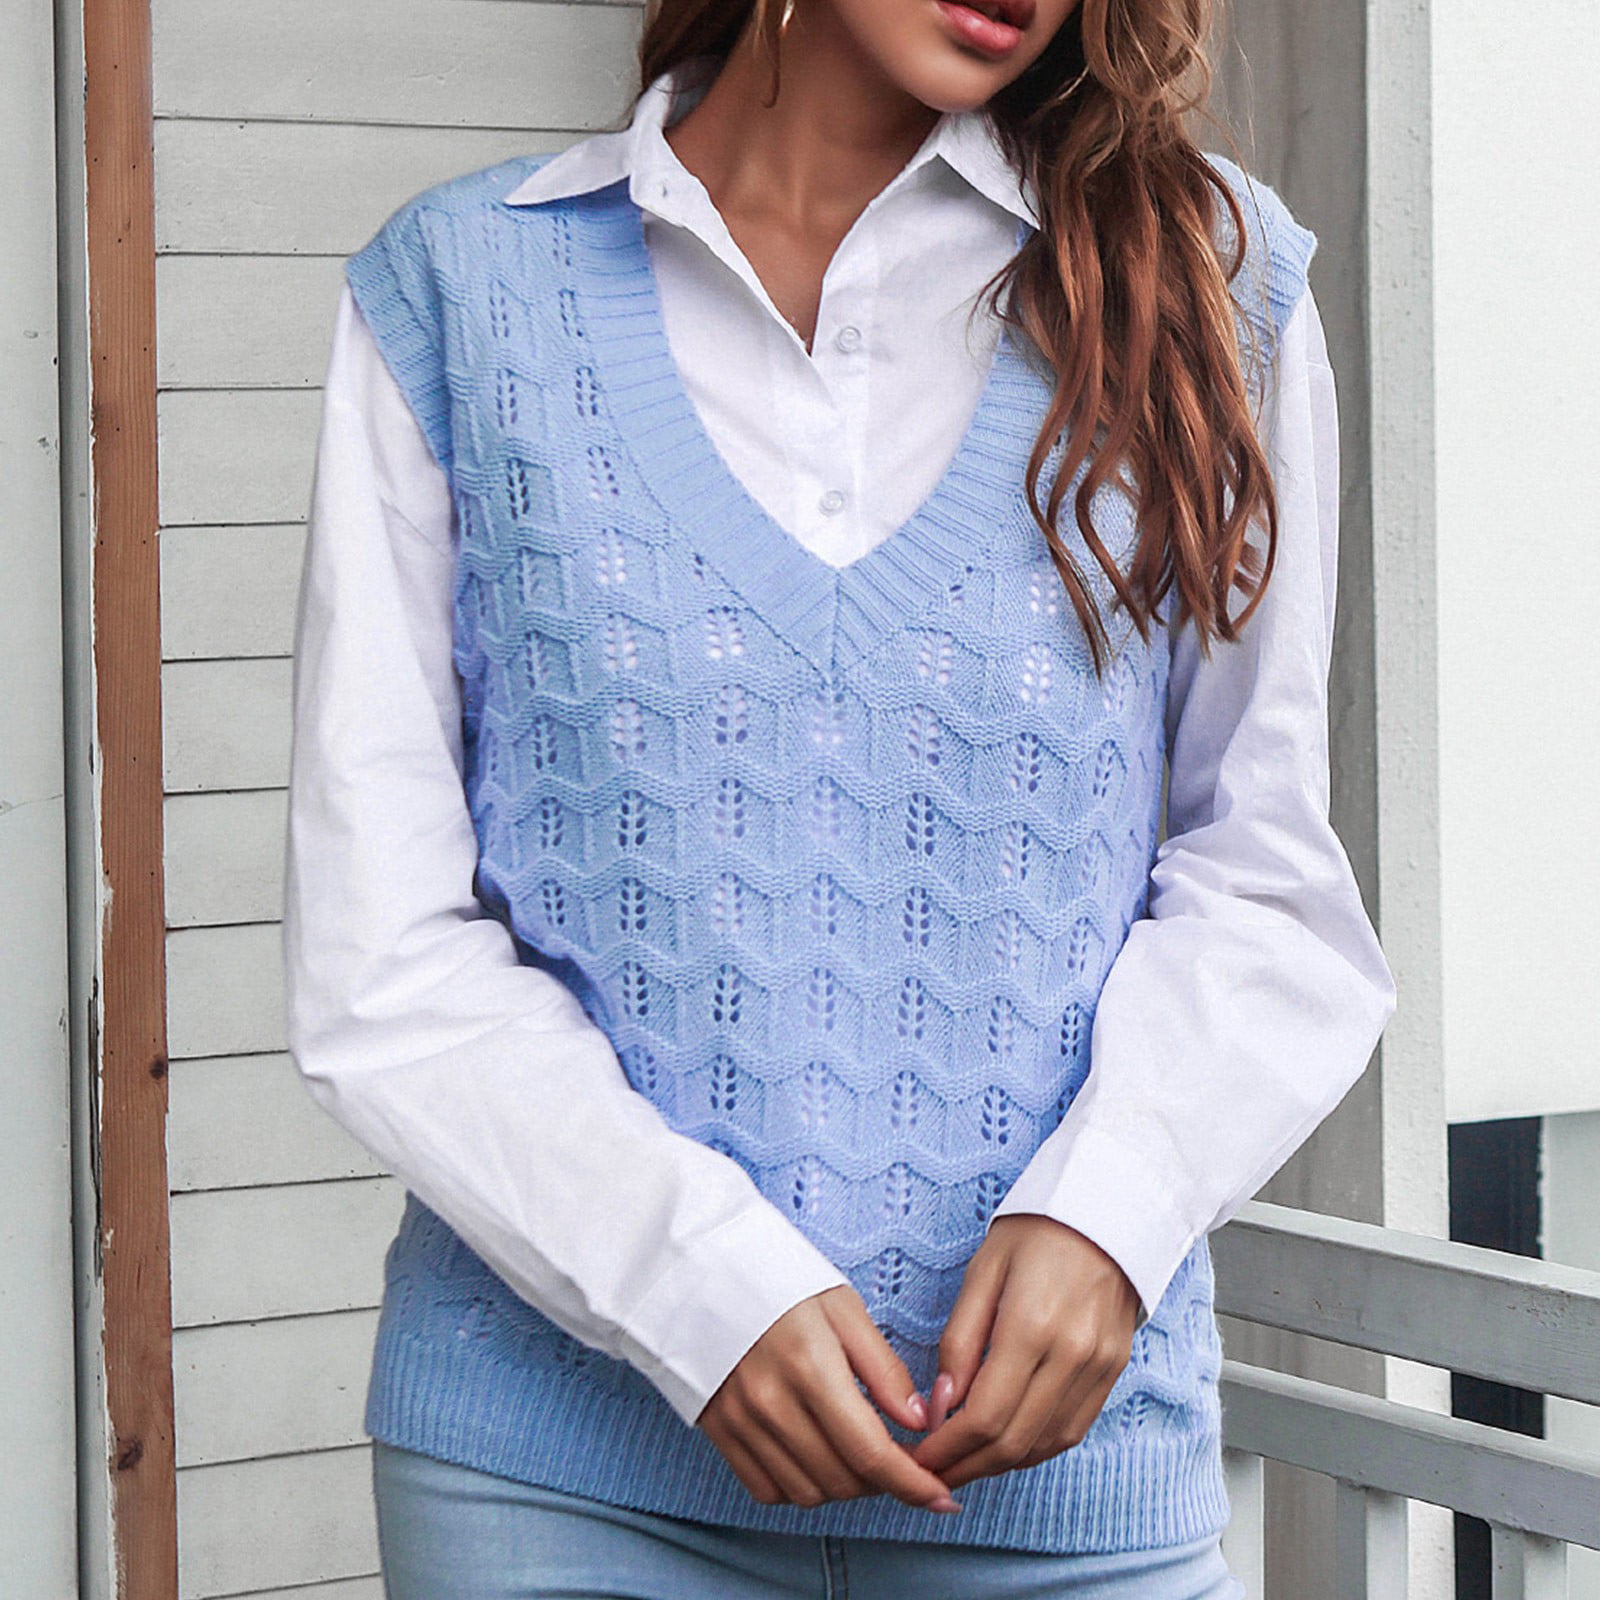 ZXHACSJ College Style Casual Loose Knit Vest Fashion Women's